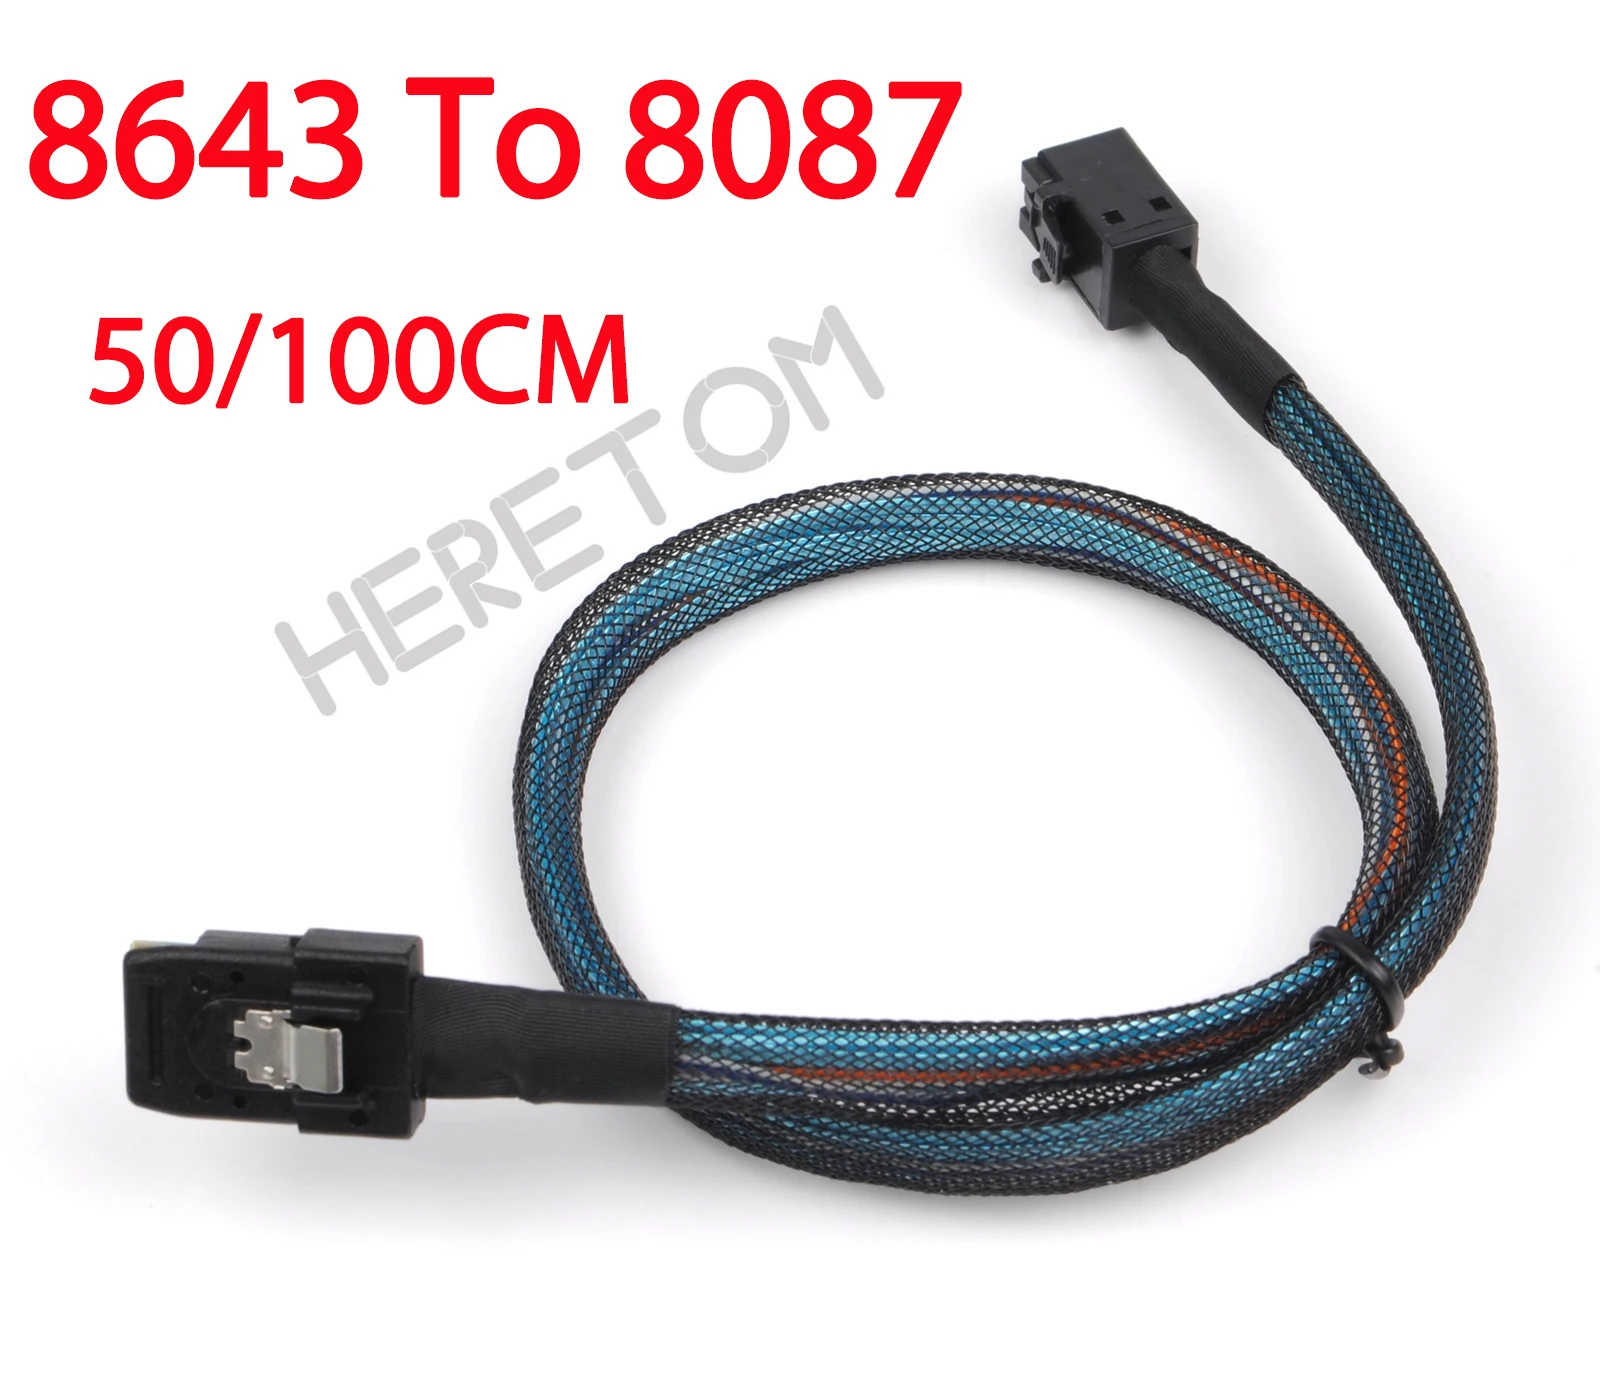 SFF-8643 Mini SAS HD External to SFF-8087 Mini SAS 36pin internal Cable 50cm 